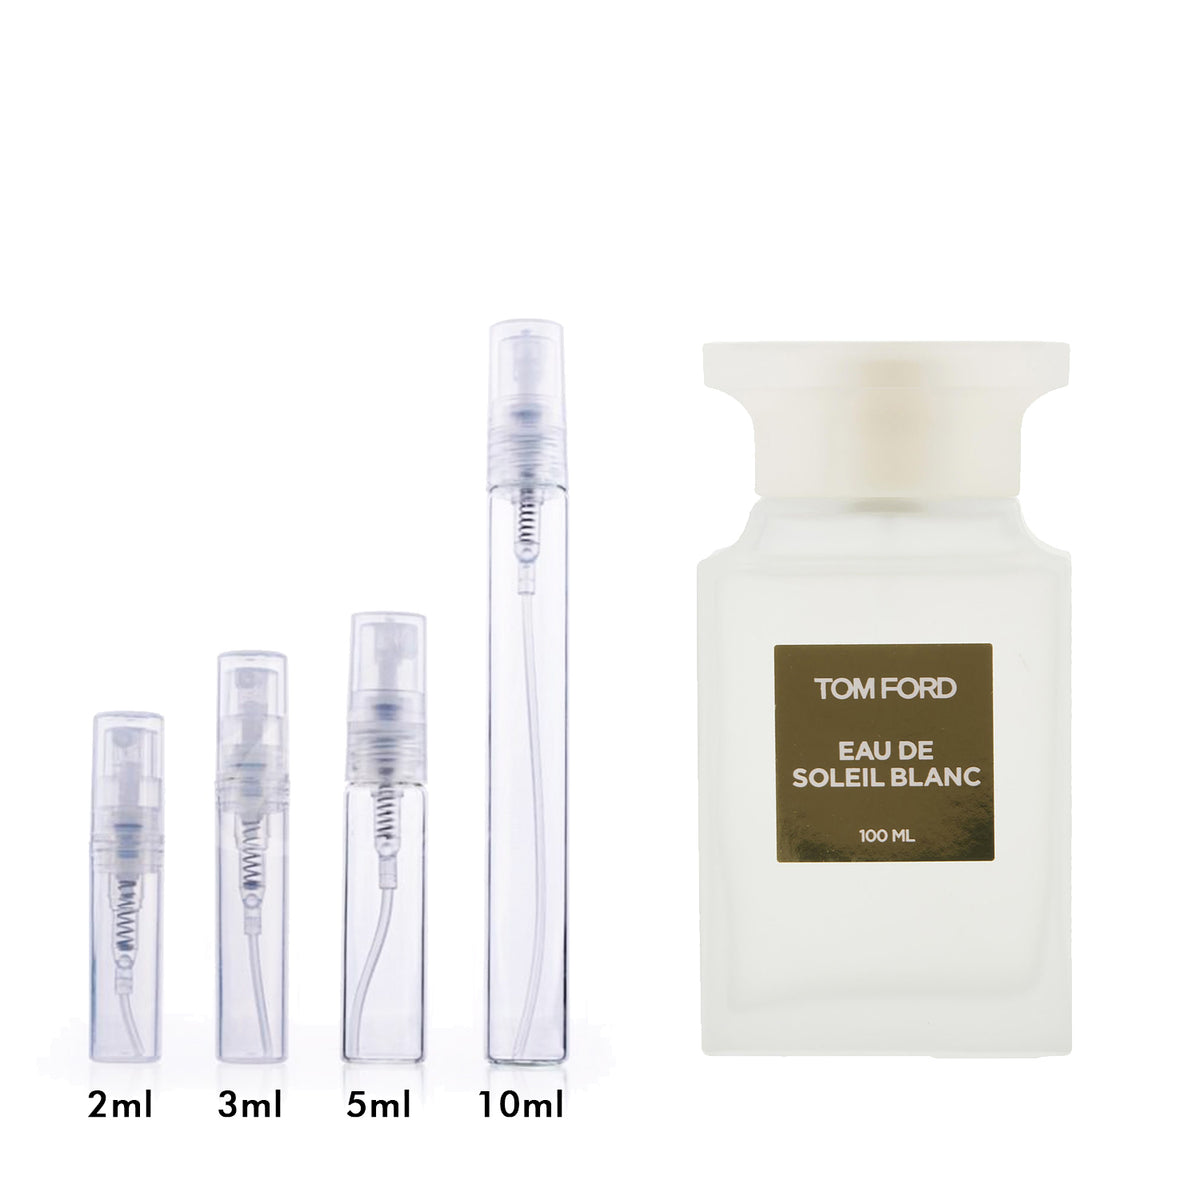 TOM FORD SOLEIL Blanc Eau De Parfum Bottling Decant Probe 